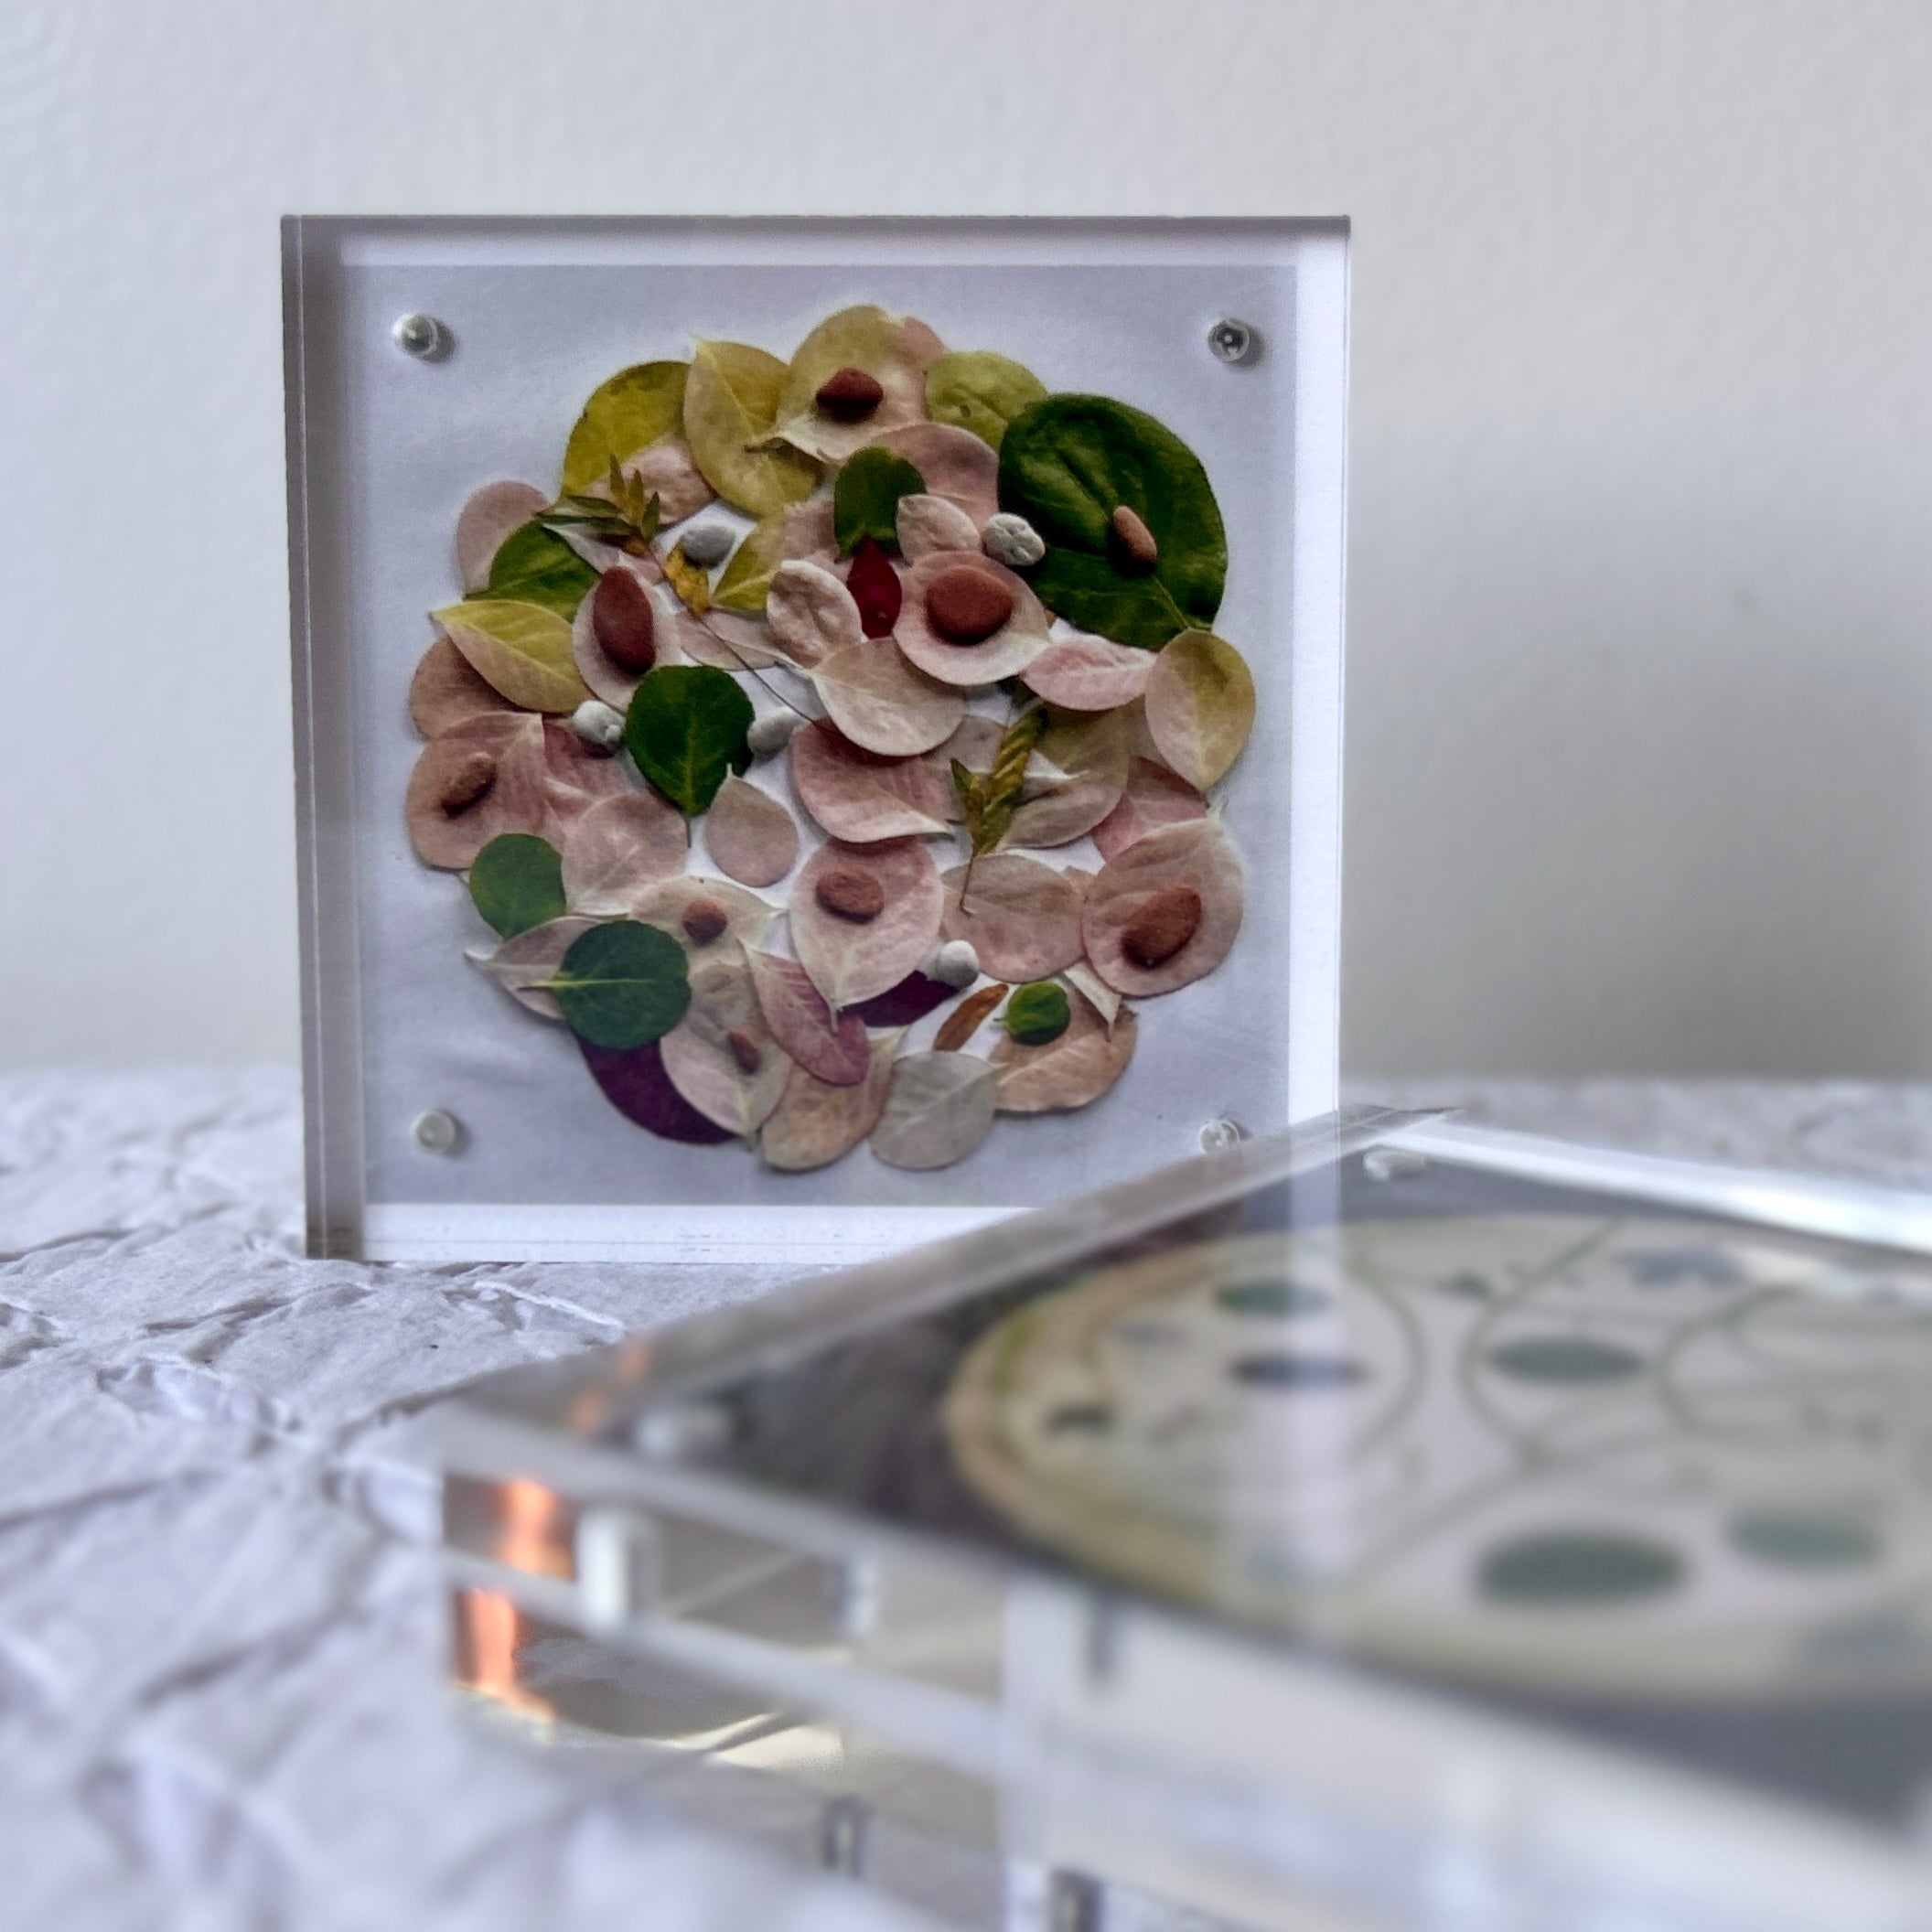 Dog Walk Diary by Margot Guralnick Mini-Print in Acrylic Block Frame